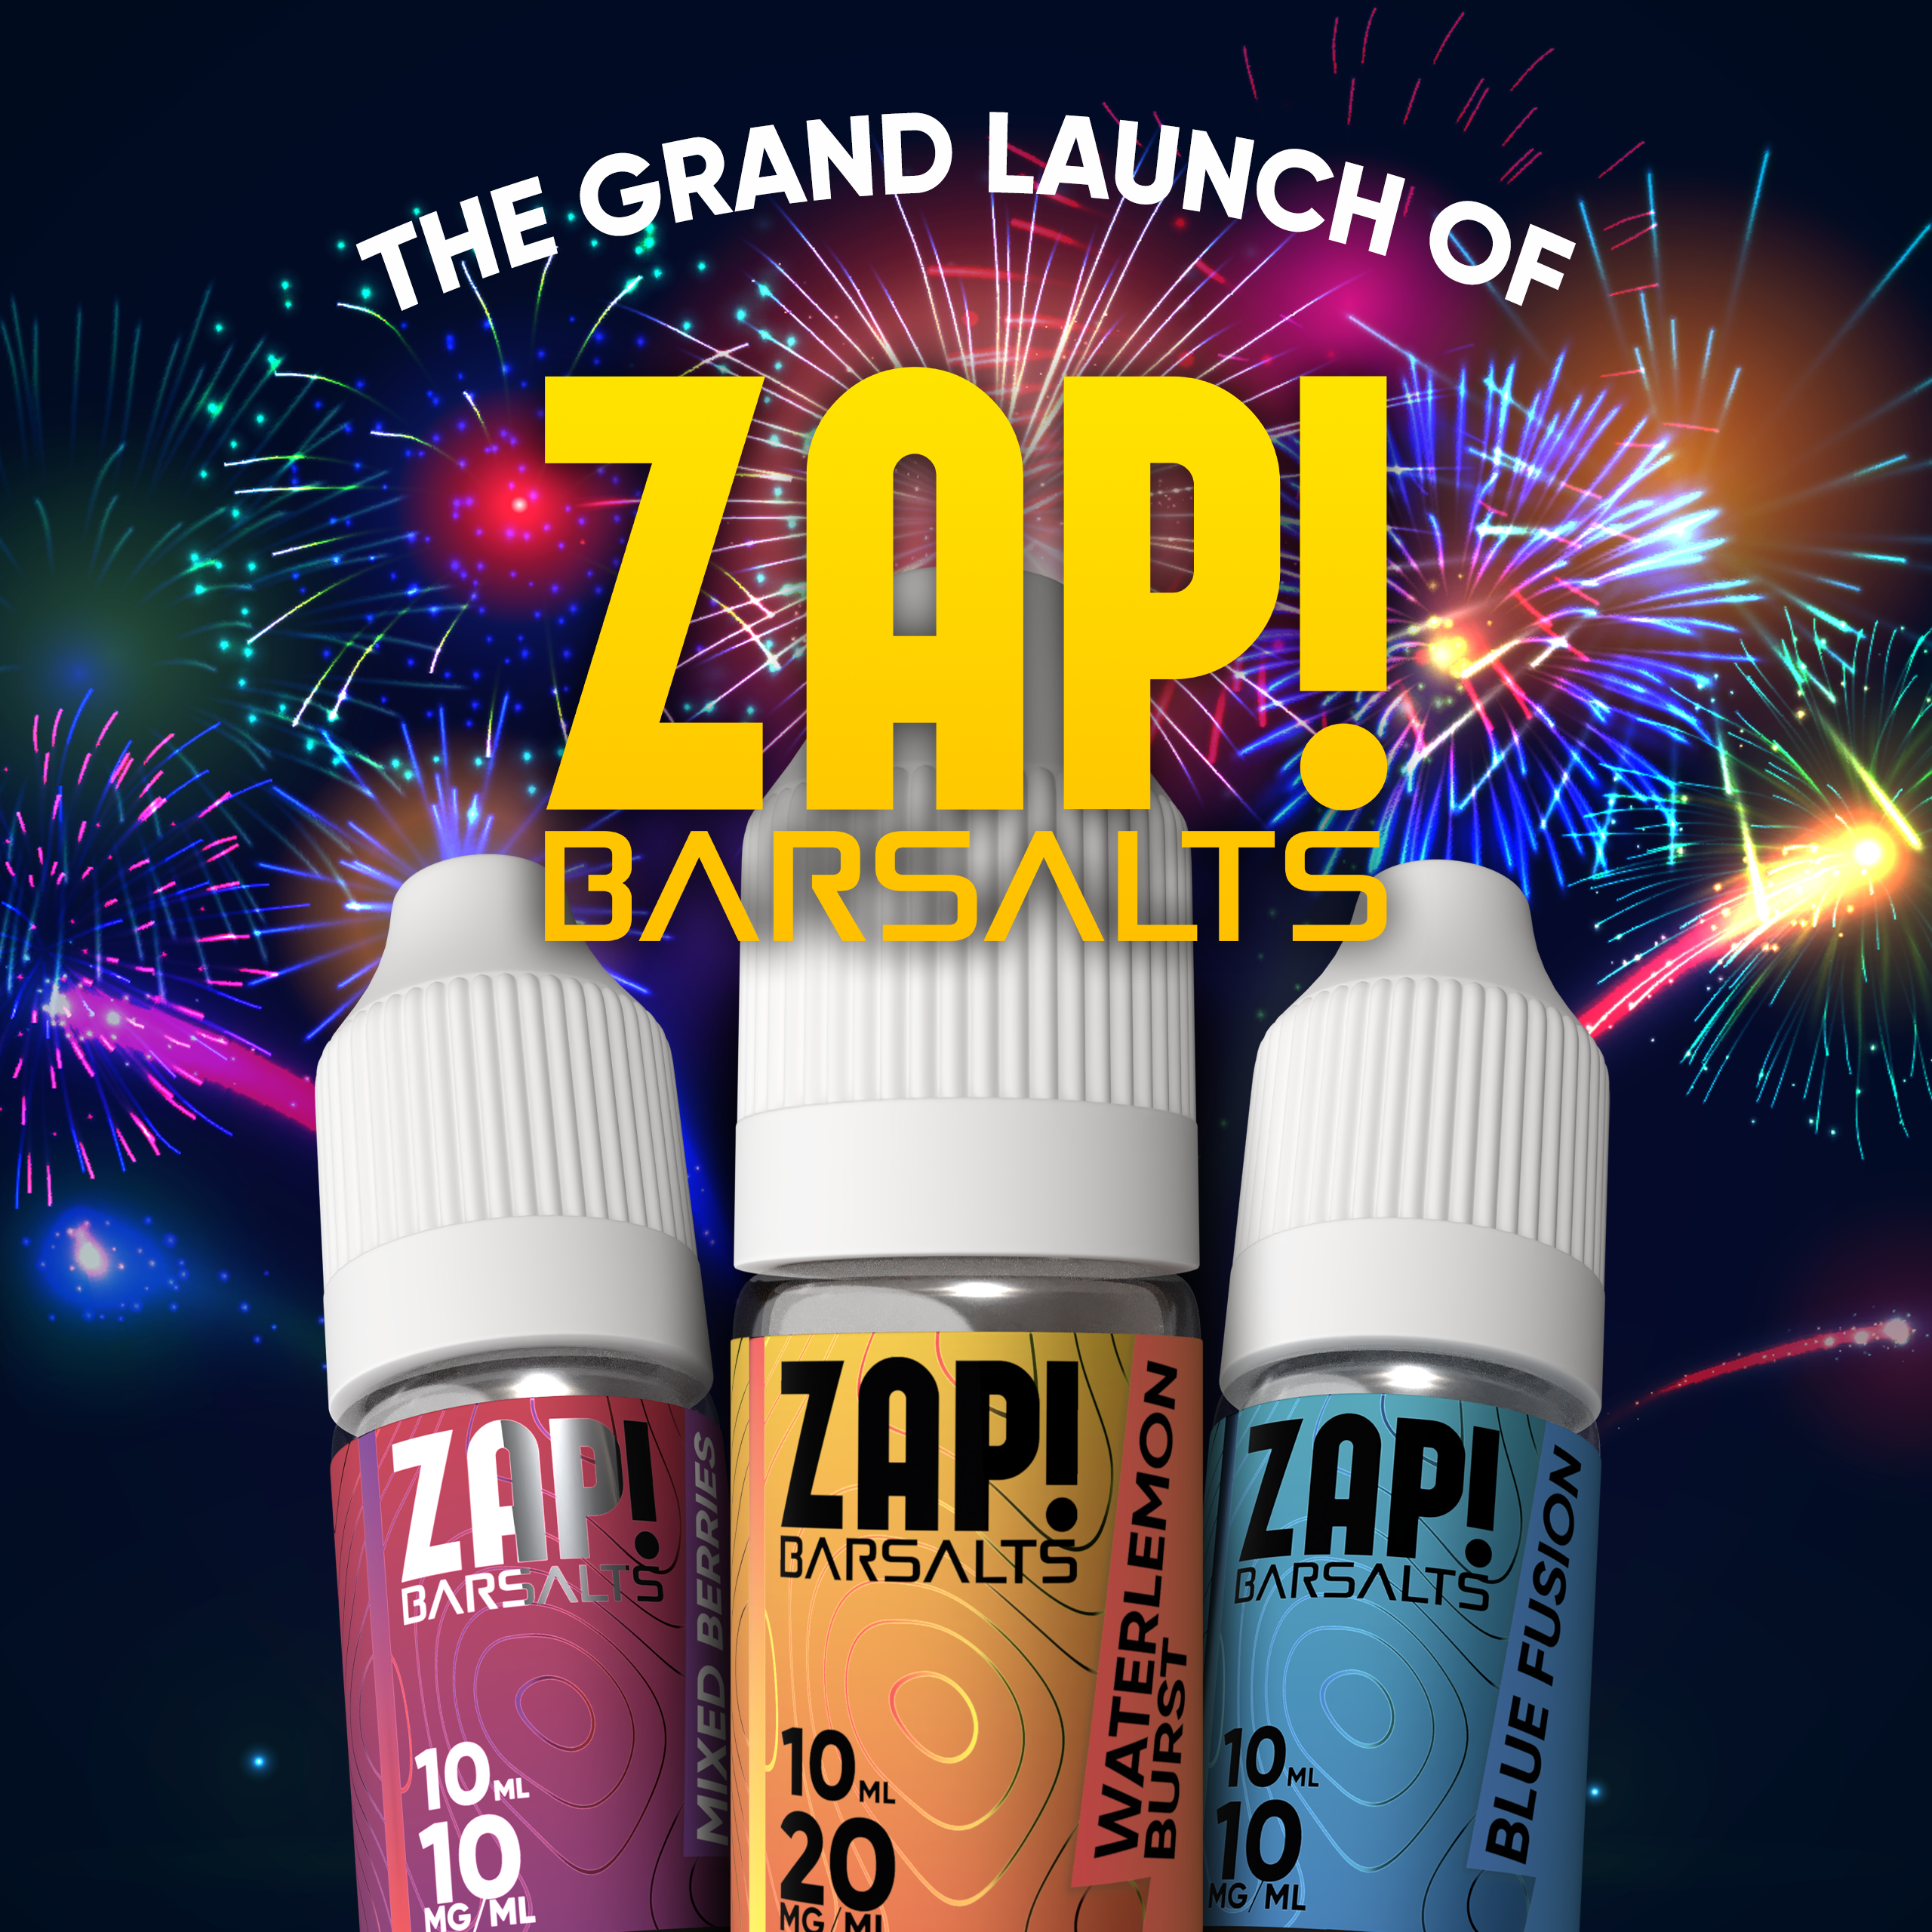 The Grand Launch of ZAP! Bar Salts